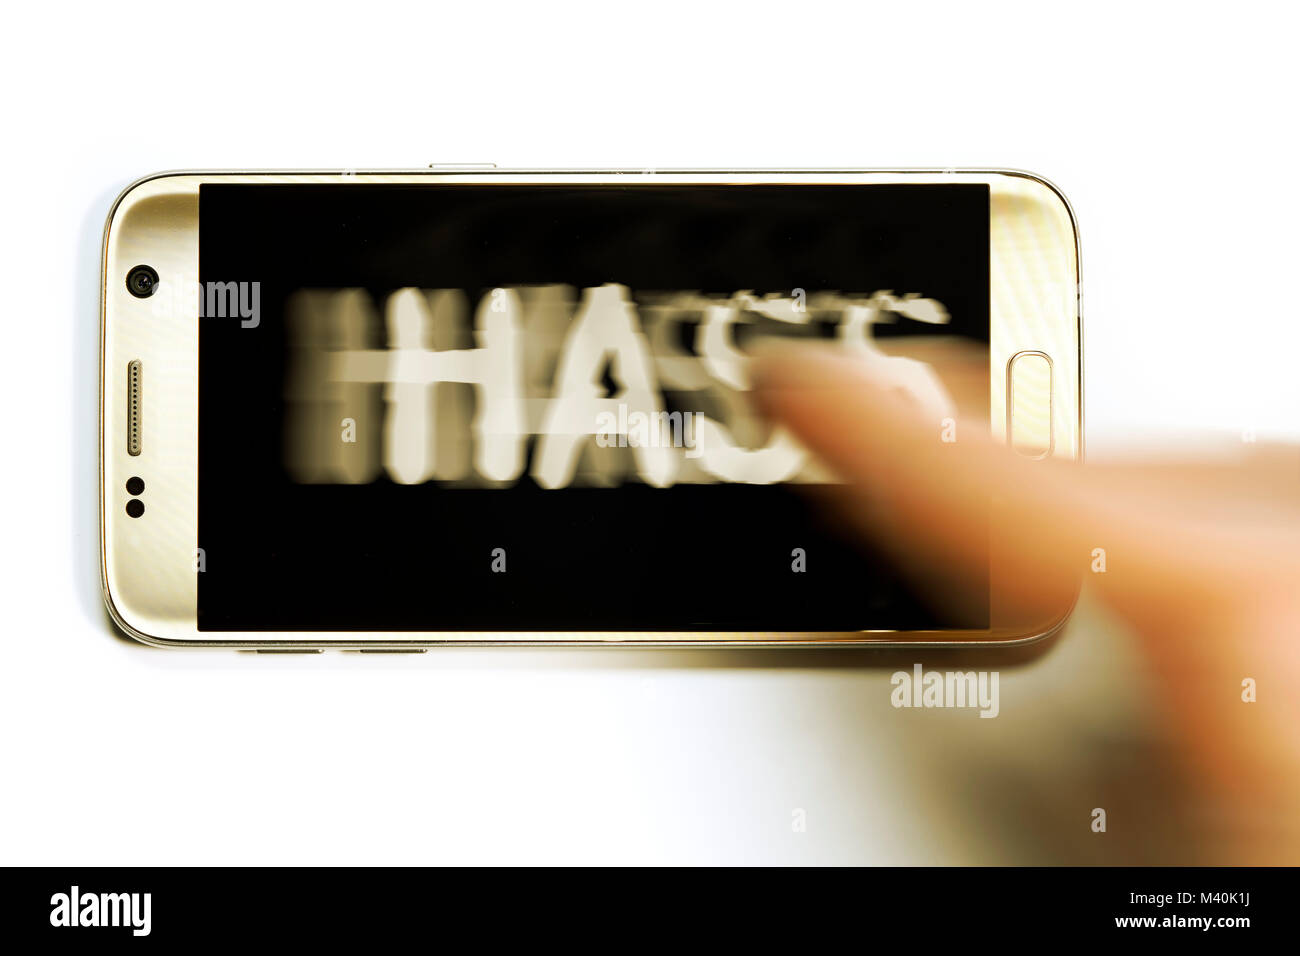 La parola odio spazzato dal telefono mobile display, das Wort Hass wird vom Handydisplay gewischt Foto Stock